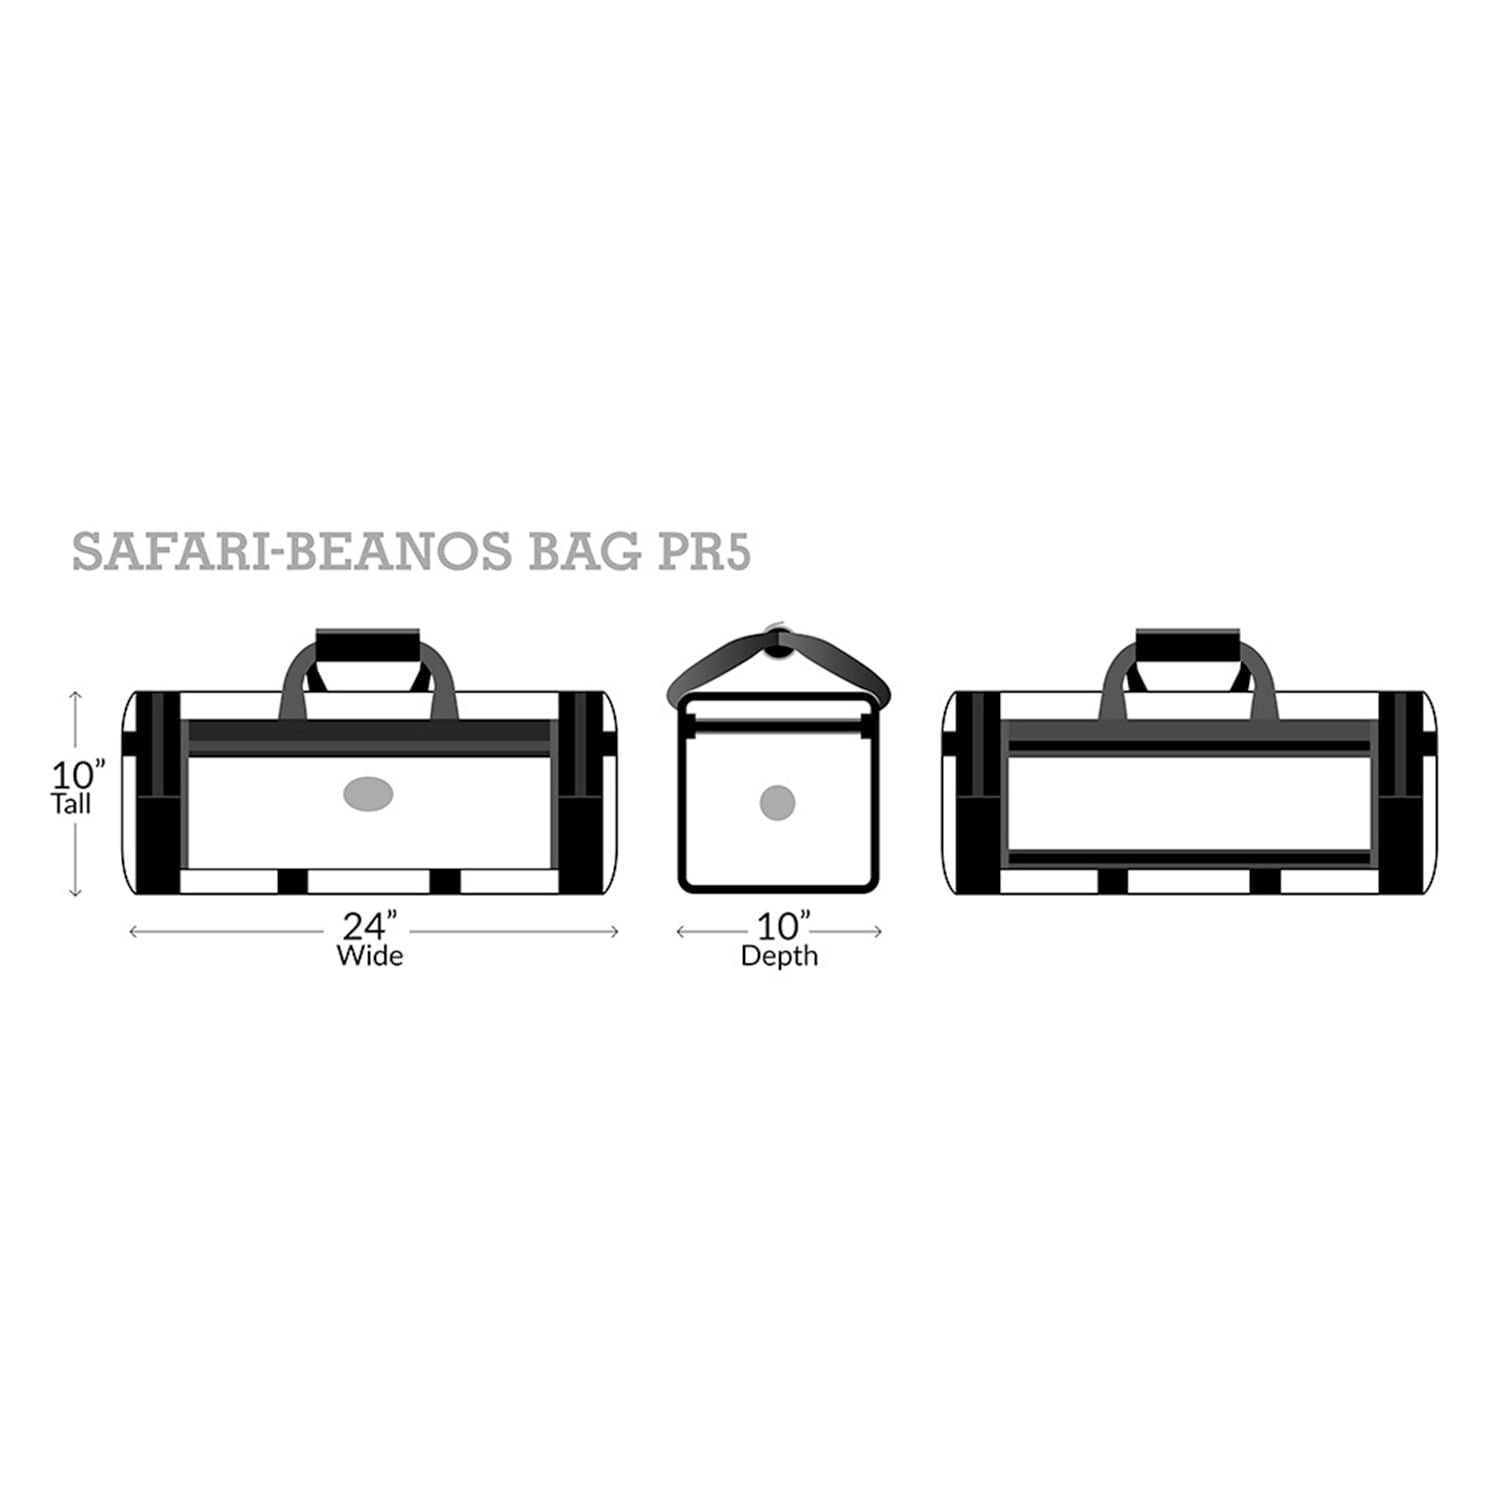 PR 5 safari beanos bag measurements 10 inches tall x 24 inches wide x 10 inches depth. 